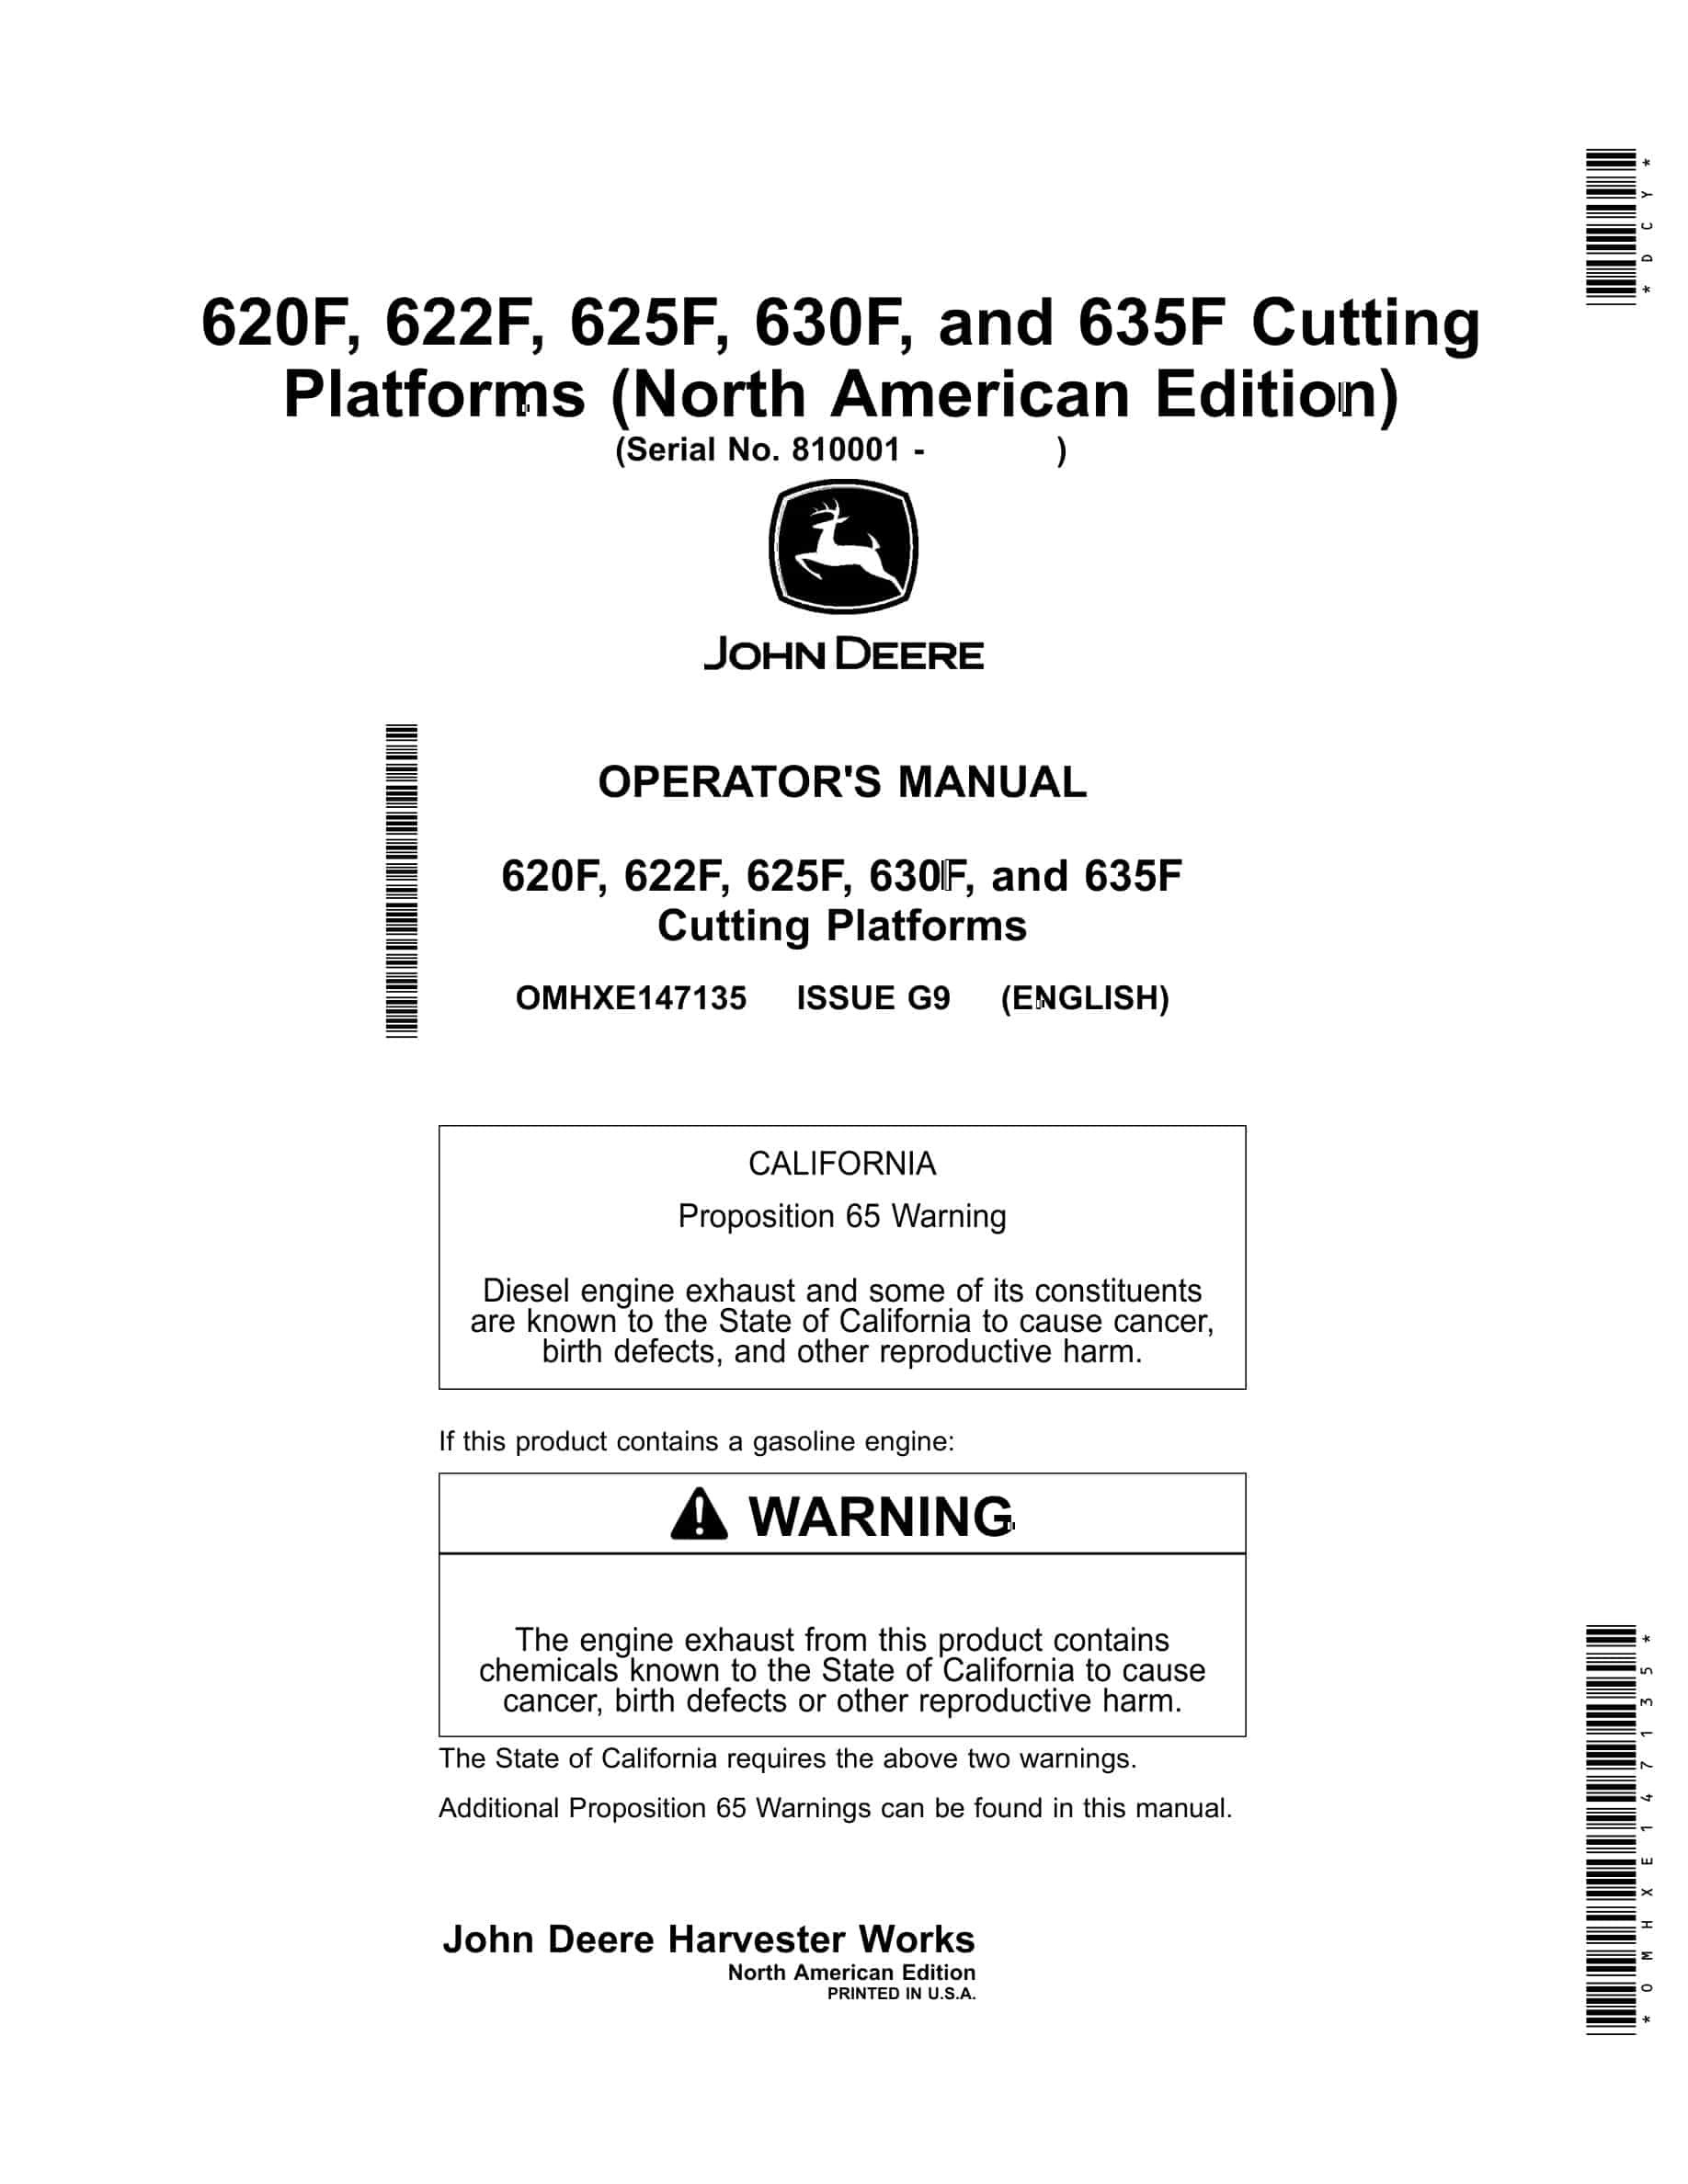 John Deere 620F, 622F, 625F, 630F, and 635F Cutting Platforms Operator Manual OMHXE147135-1